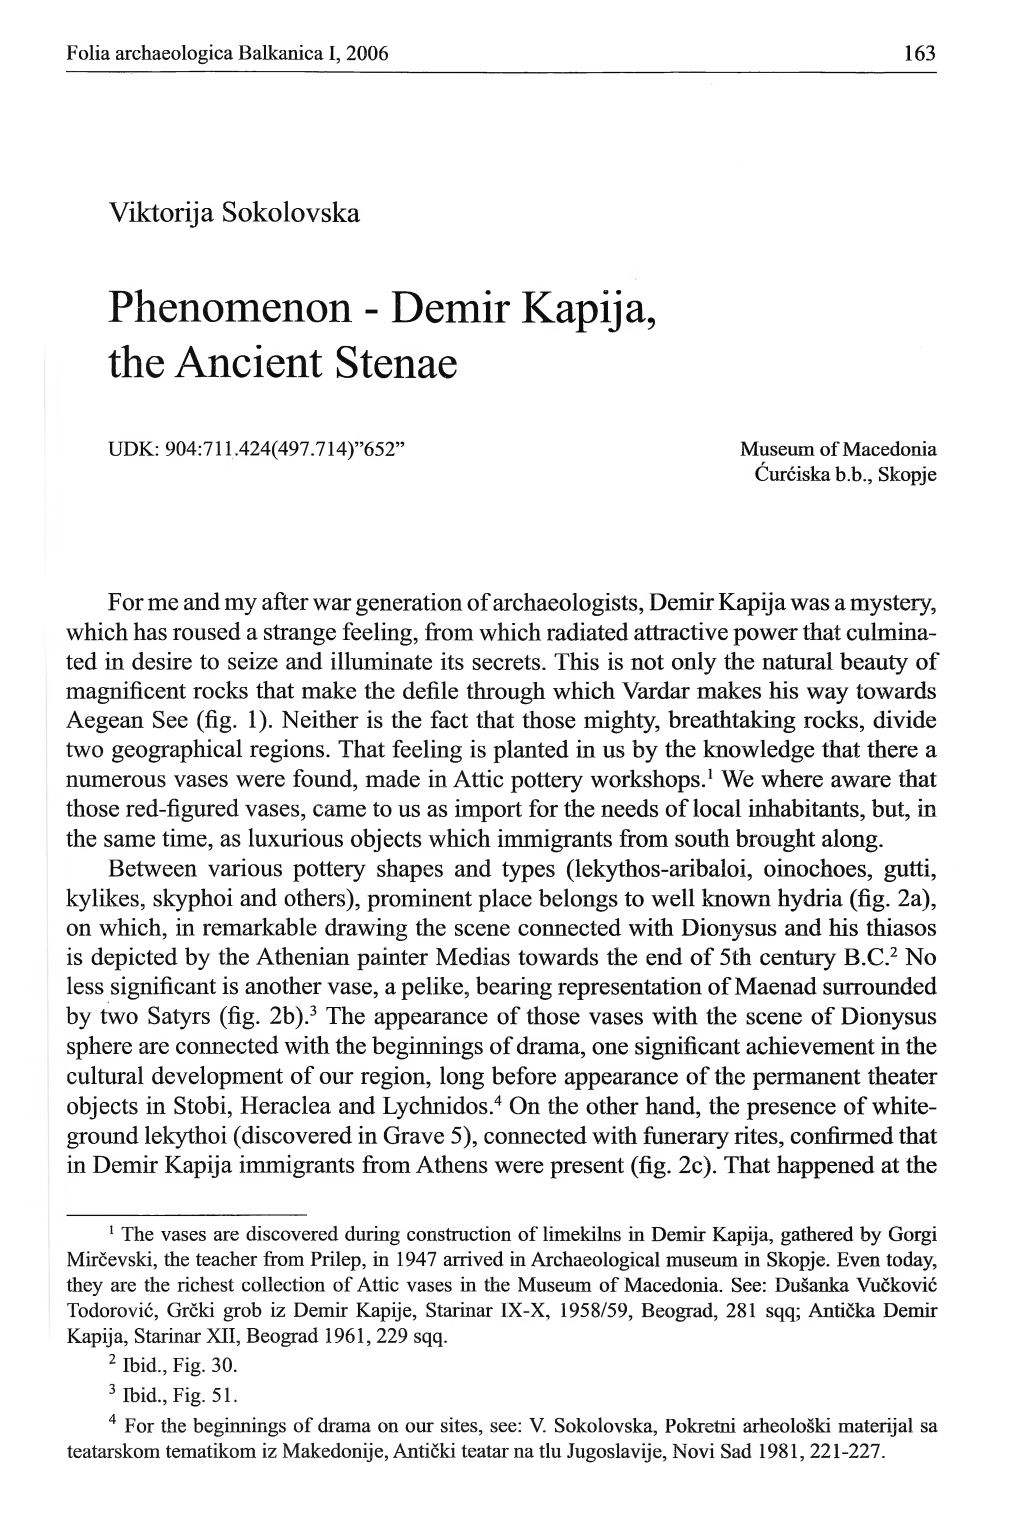 Phenomenon - Demir Kapija, the Ancient Stenae